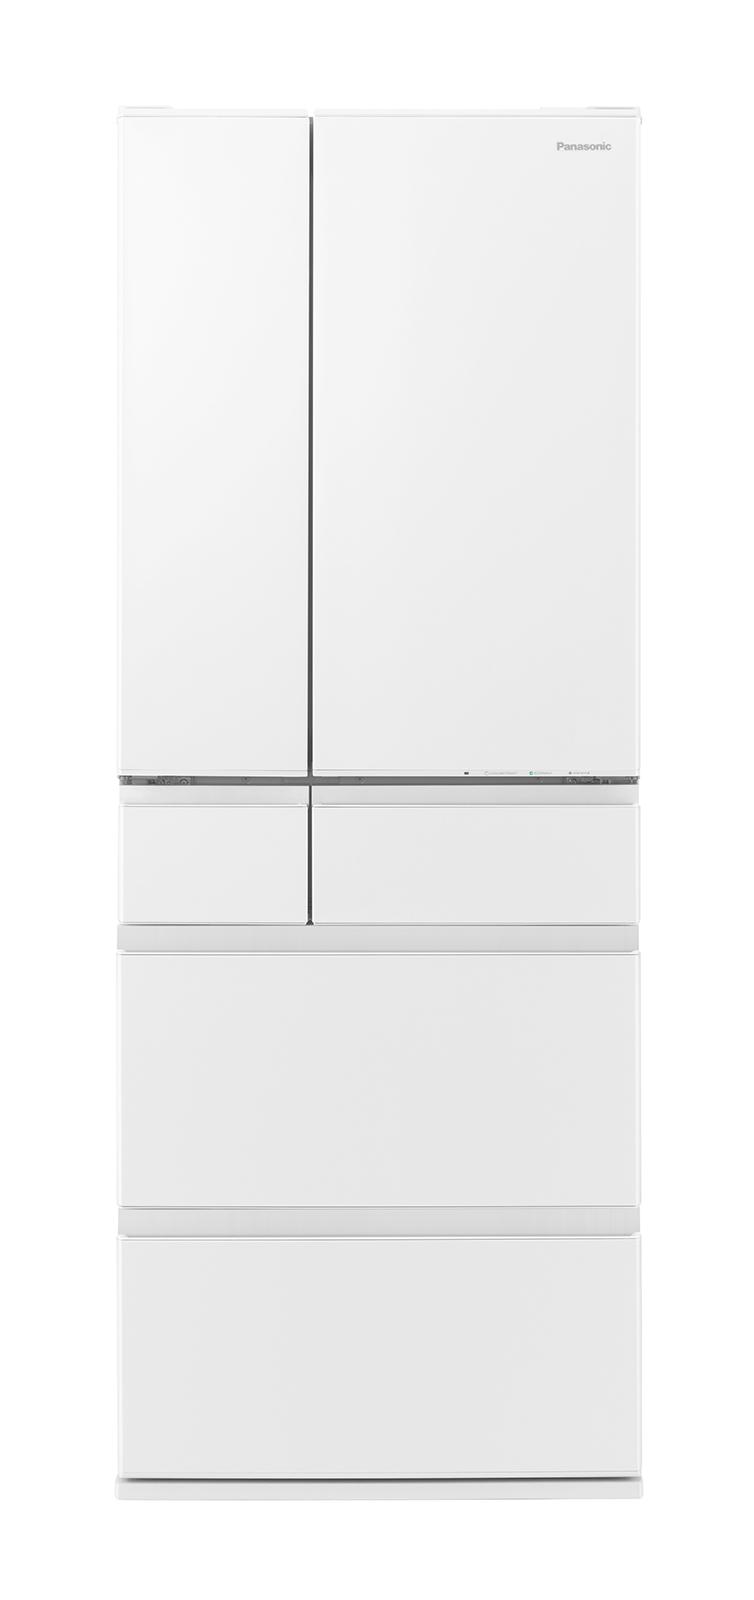 大容量冷蔵庫 NR-F516MEX 他1機種を発売。 | 個人向け商品 | 製品 